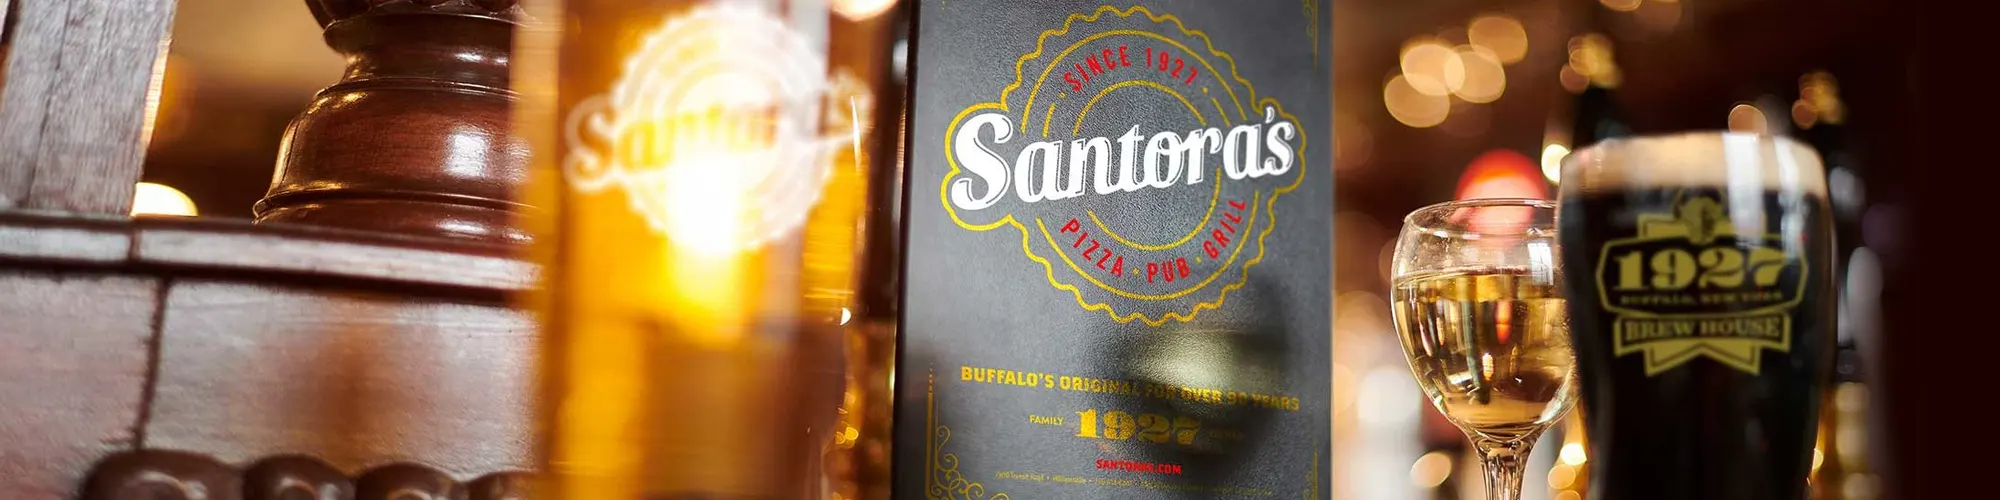 Santora's Branding by The Design Department